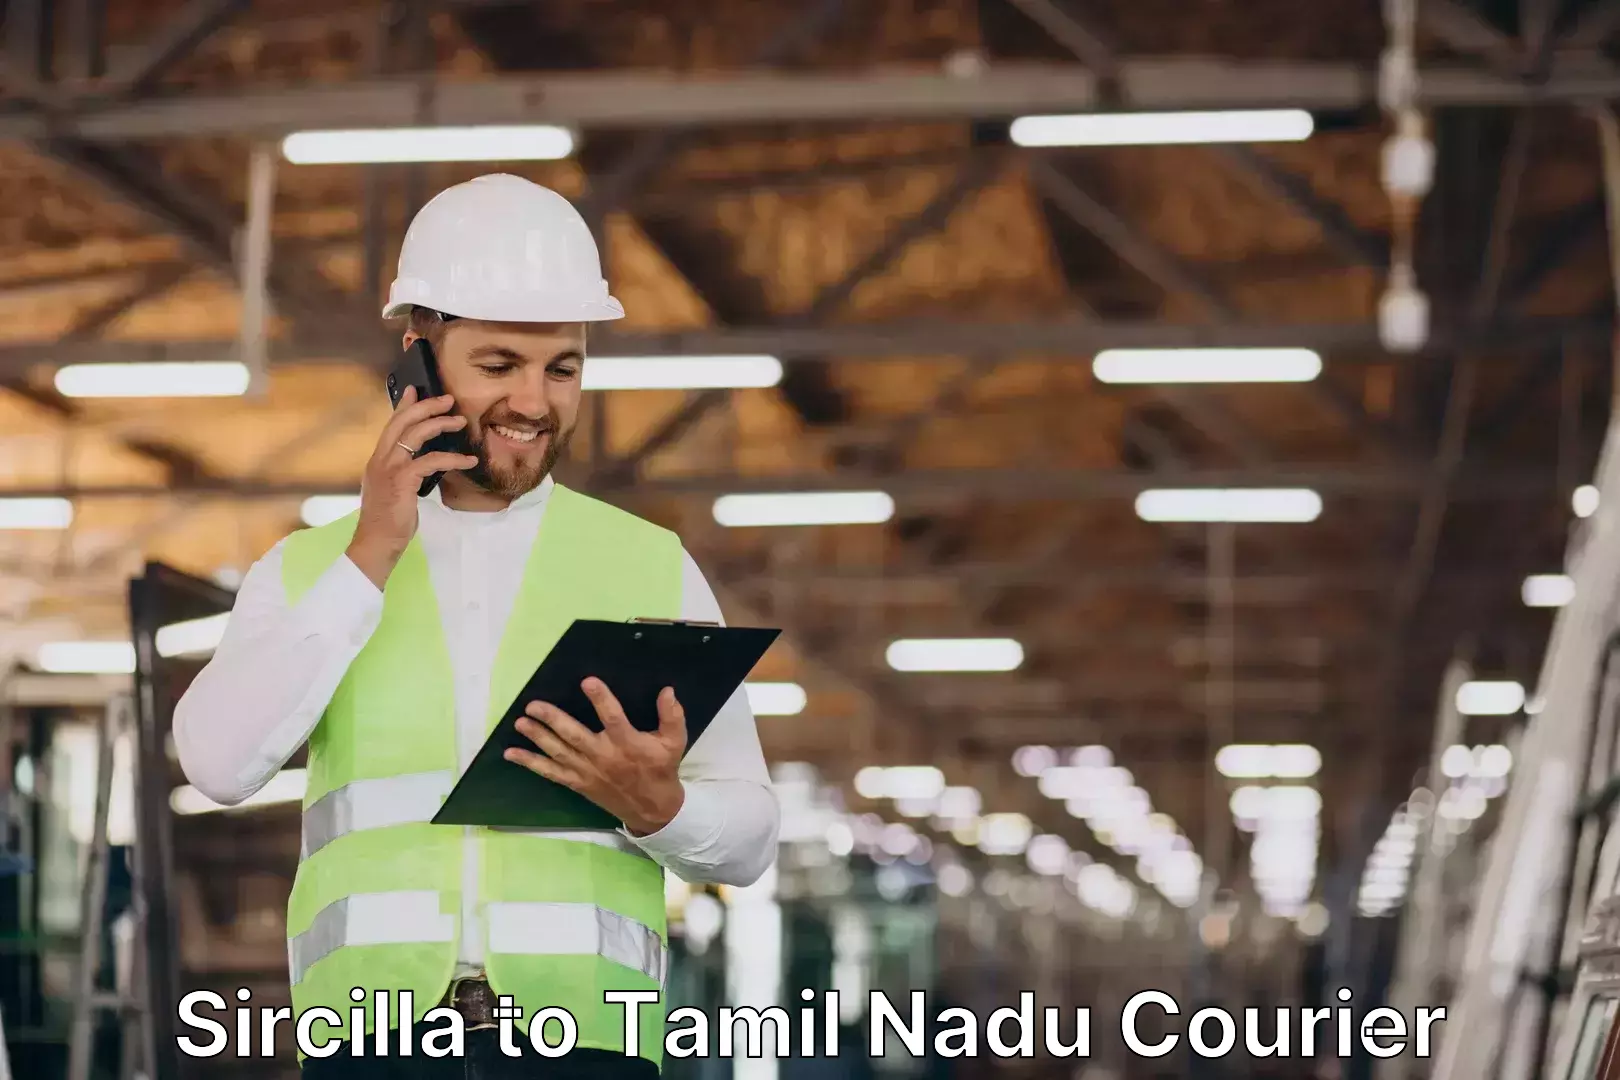 Luggage transport consultancy Sircilla to Tamil Nadu